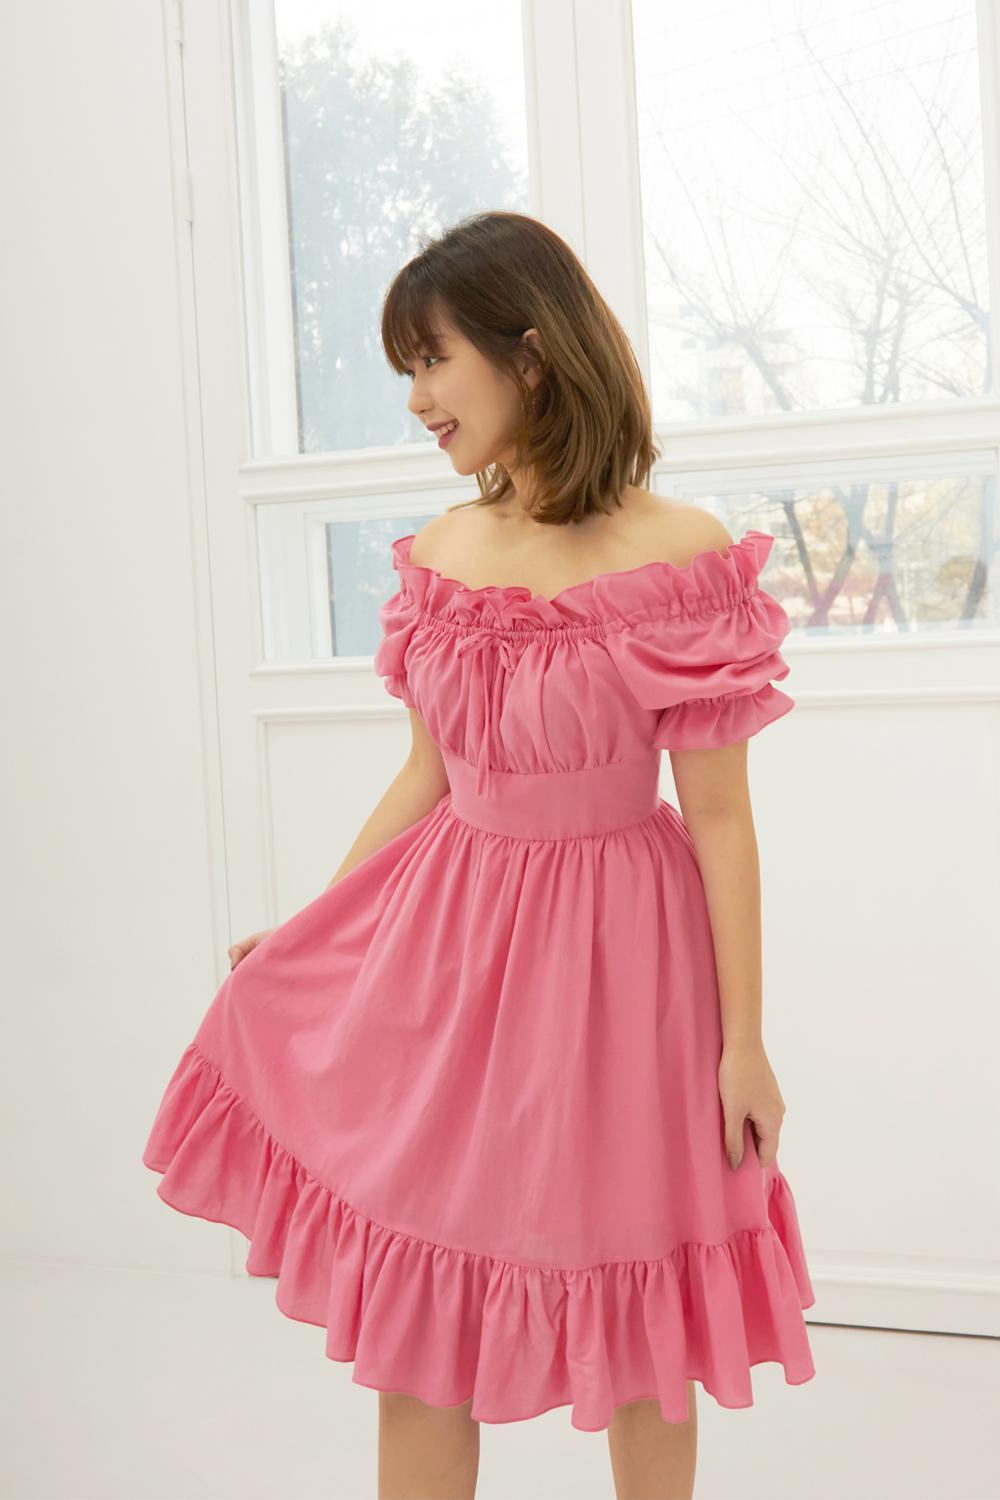 Blossom volume dress (Pink)